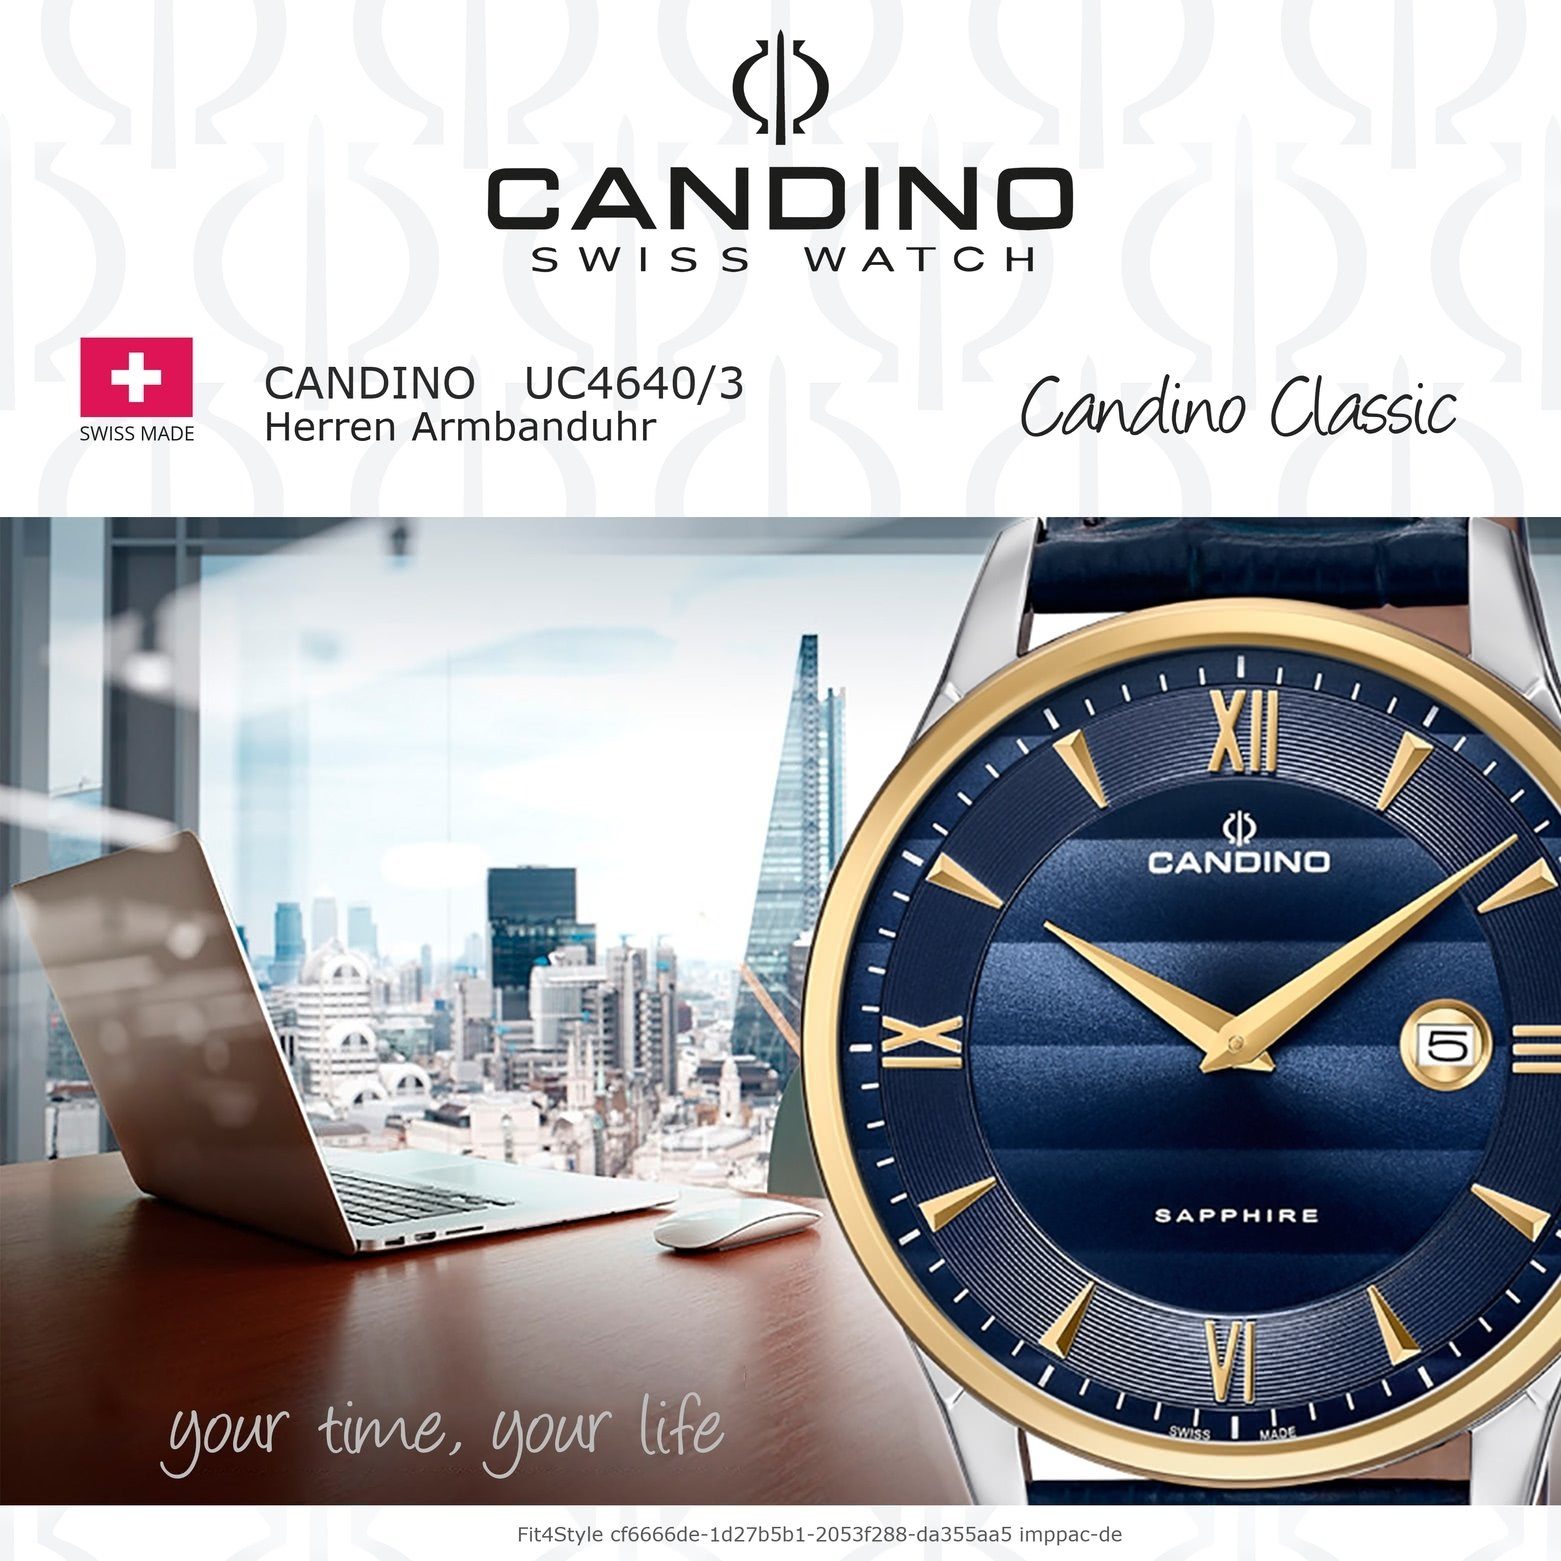 Herren rund, Lederarmband Candino blau, C4640/3, Armbanduhr Quarzuhr Elegant Candino Analog Quarzuhr Herren